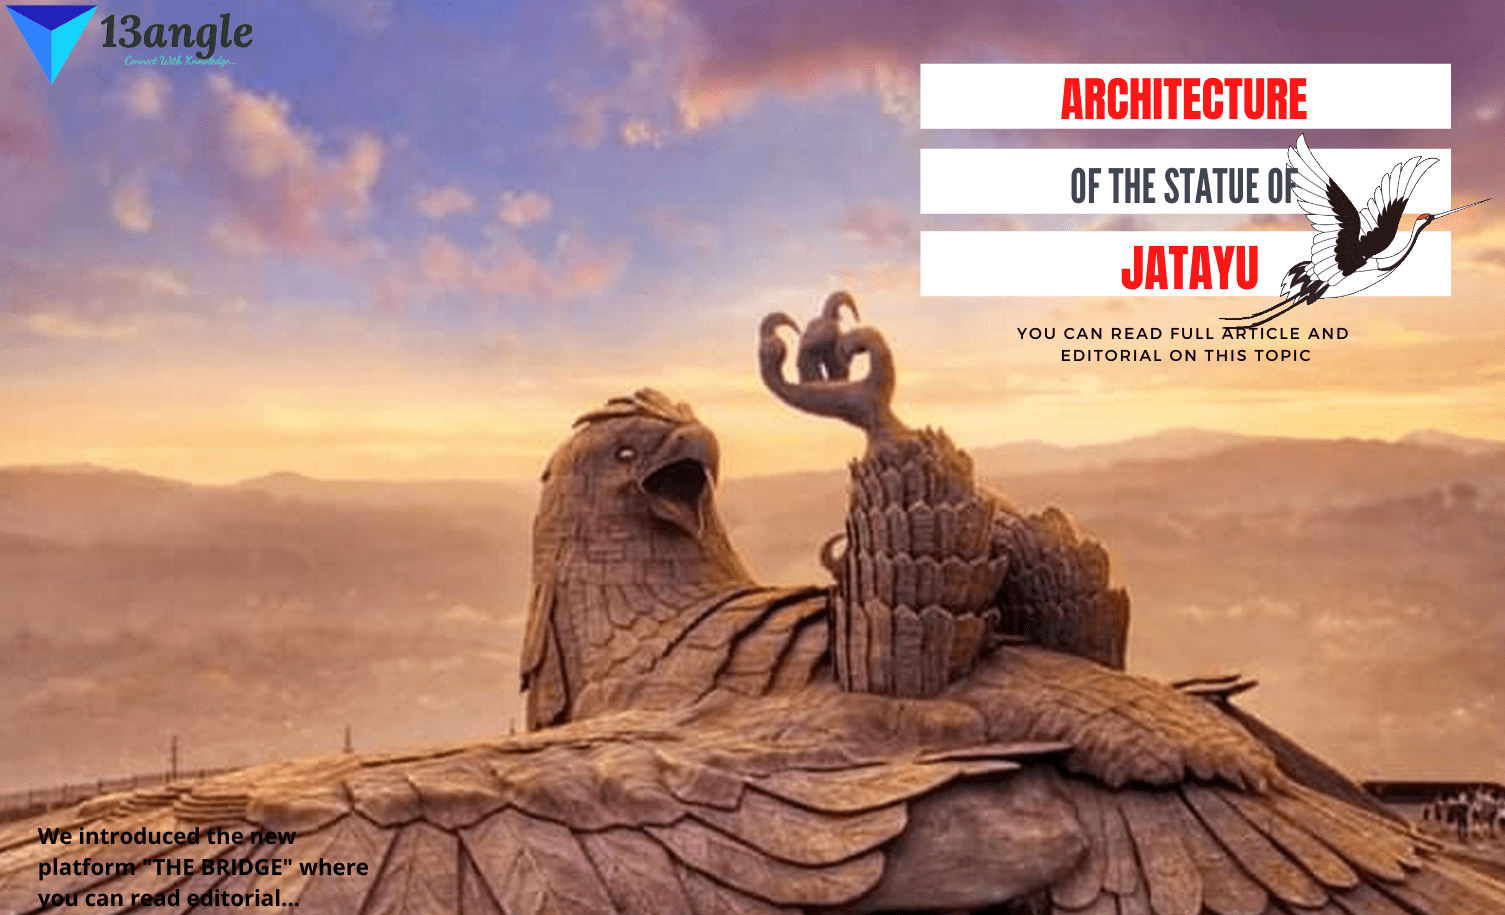 Architecture of the statue of Jatayu- 13angle.com